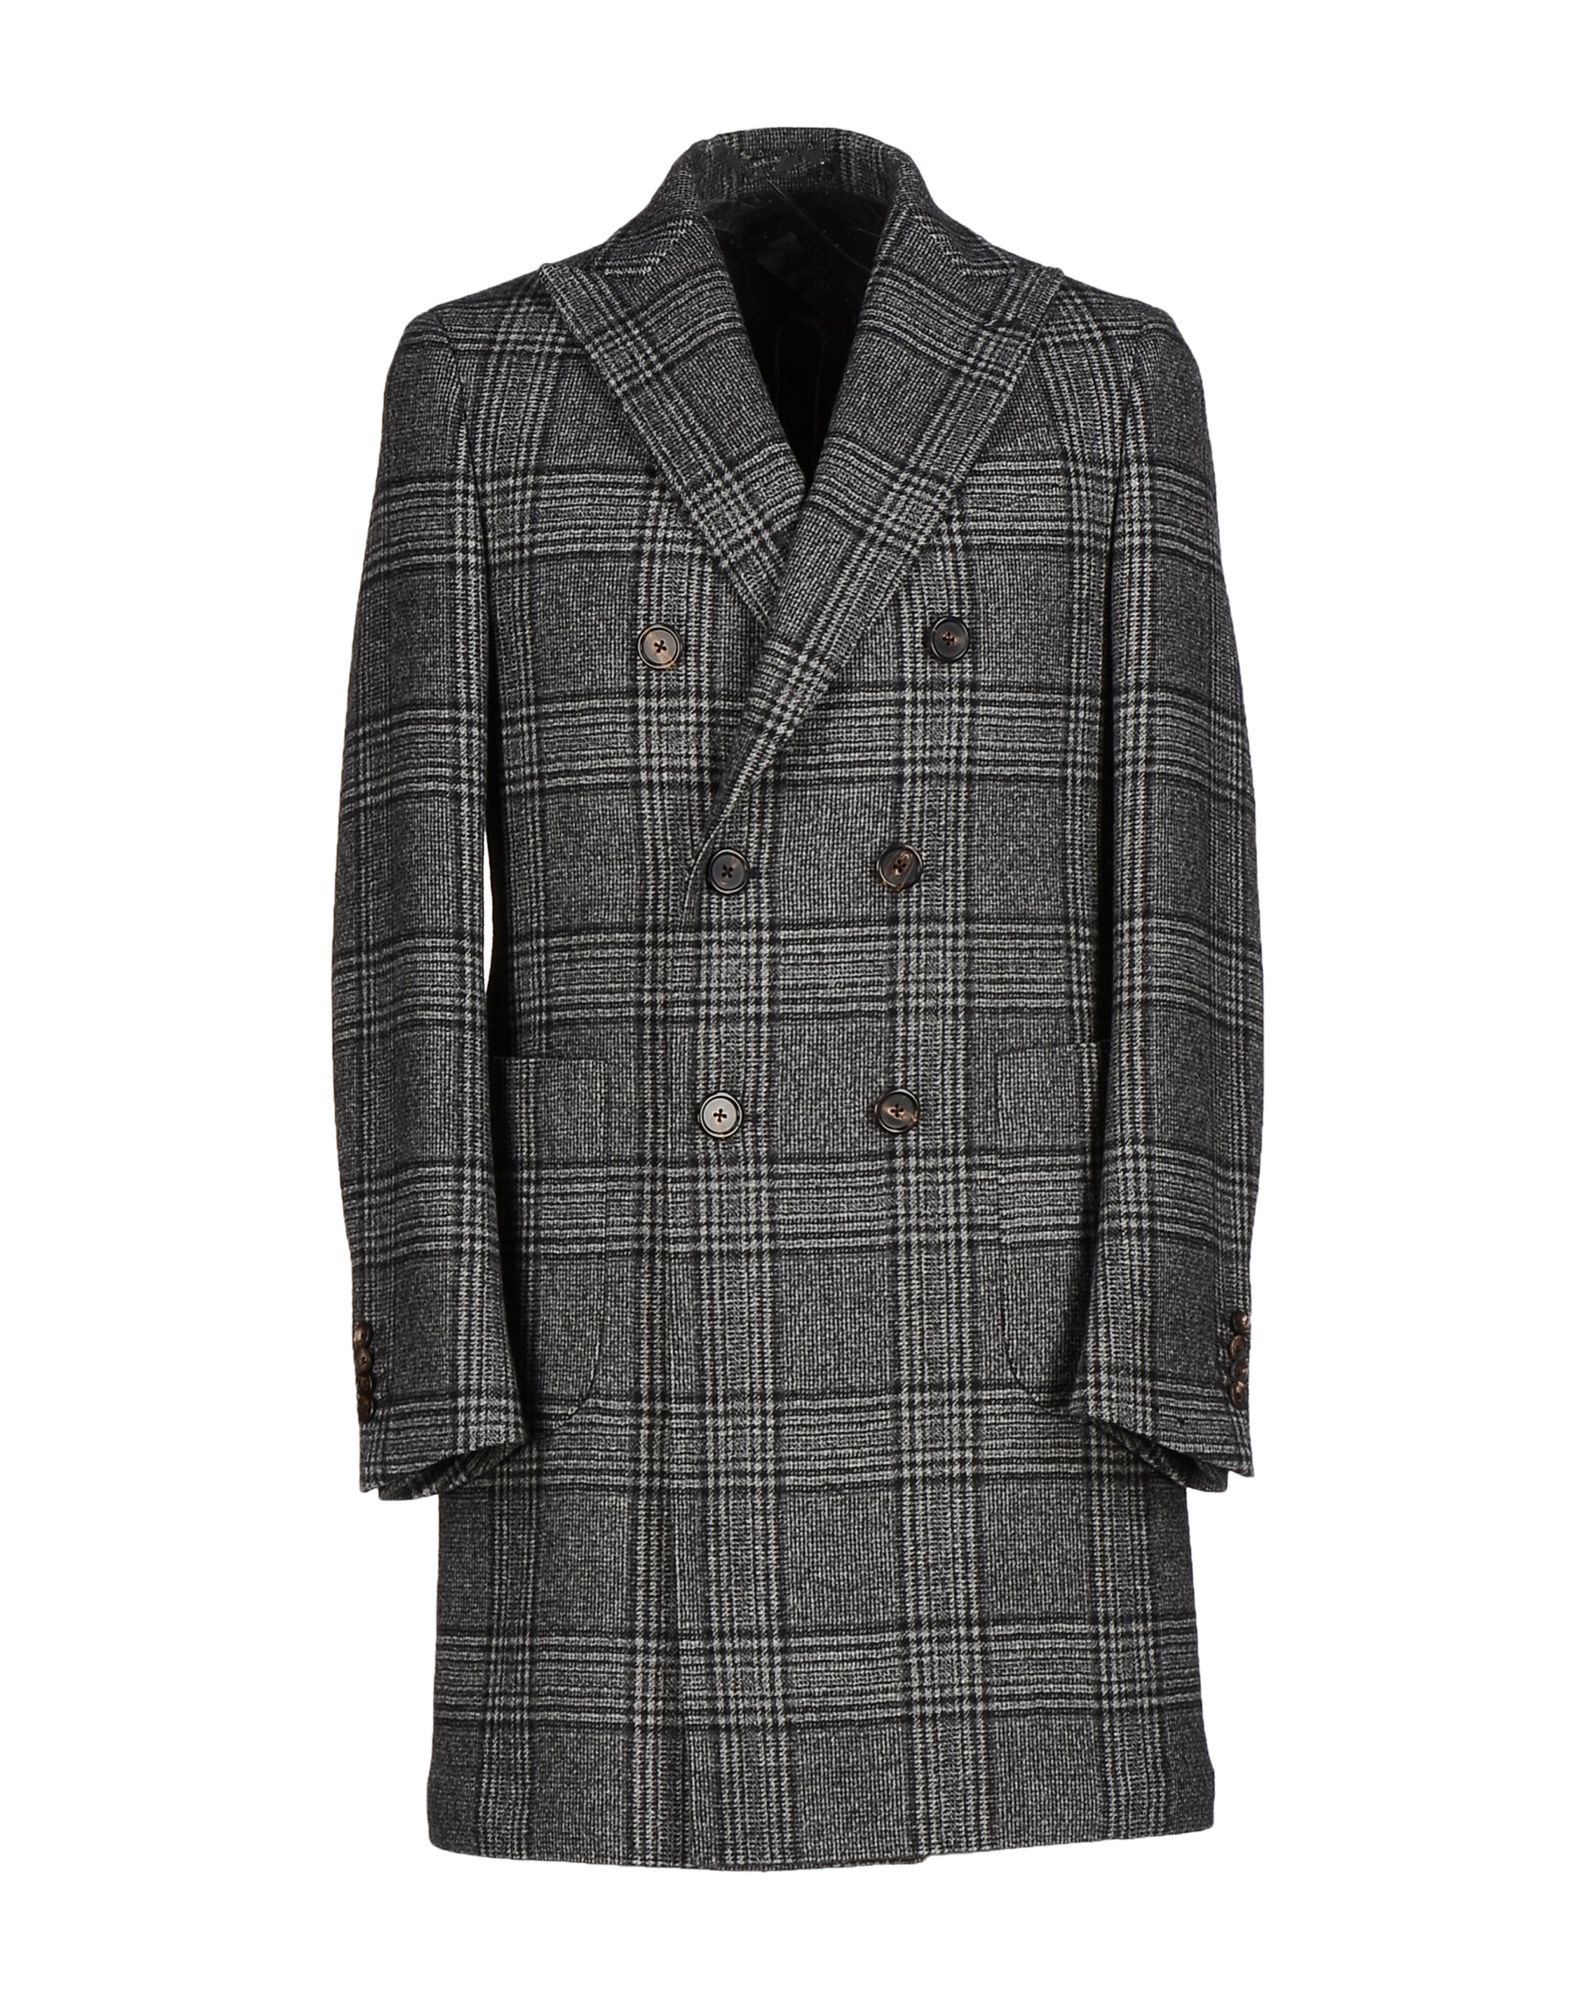 Lyst - Lardini Coat in Gray for Men